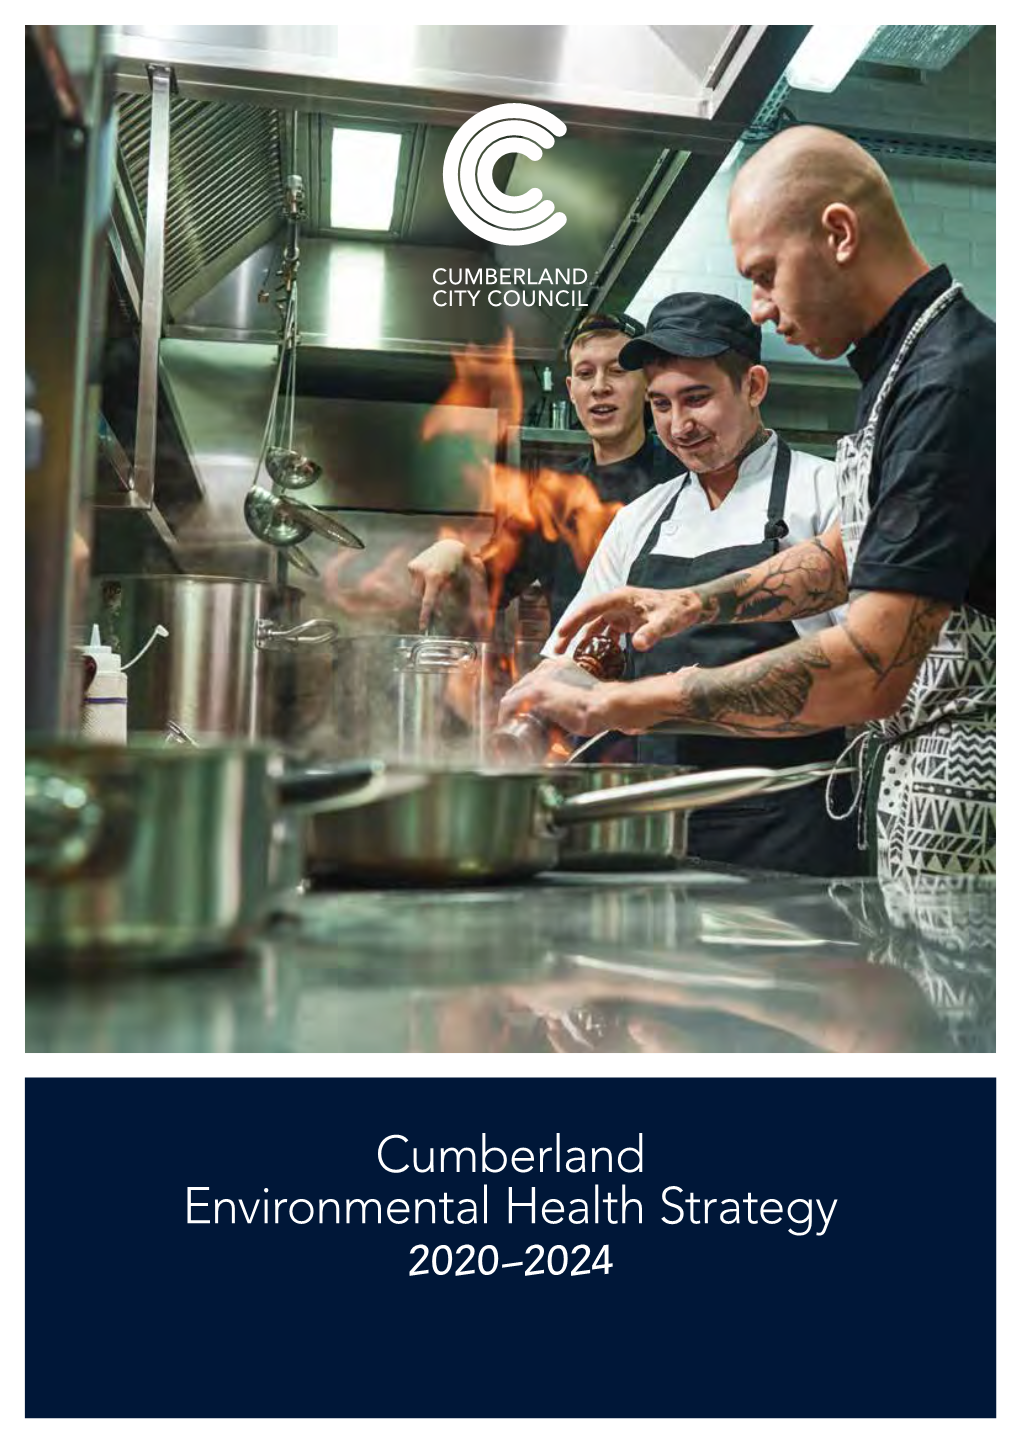 Cumberland Environmental Health Strategy 2020-2024